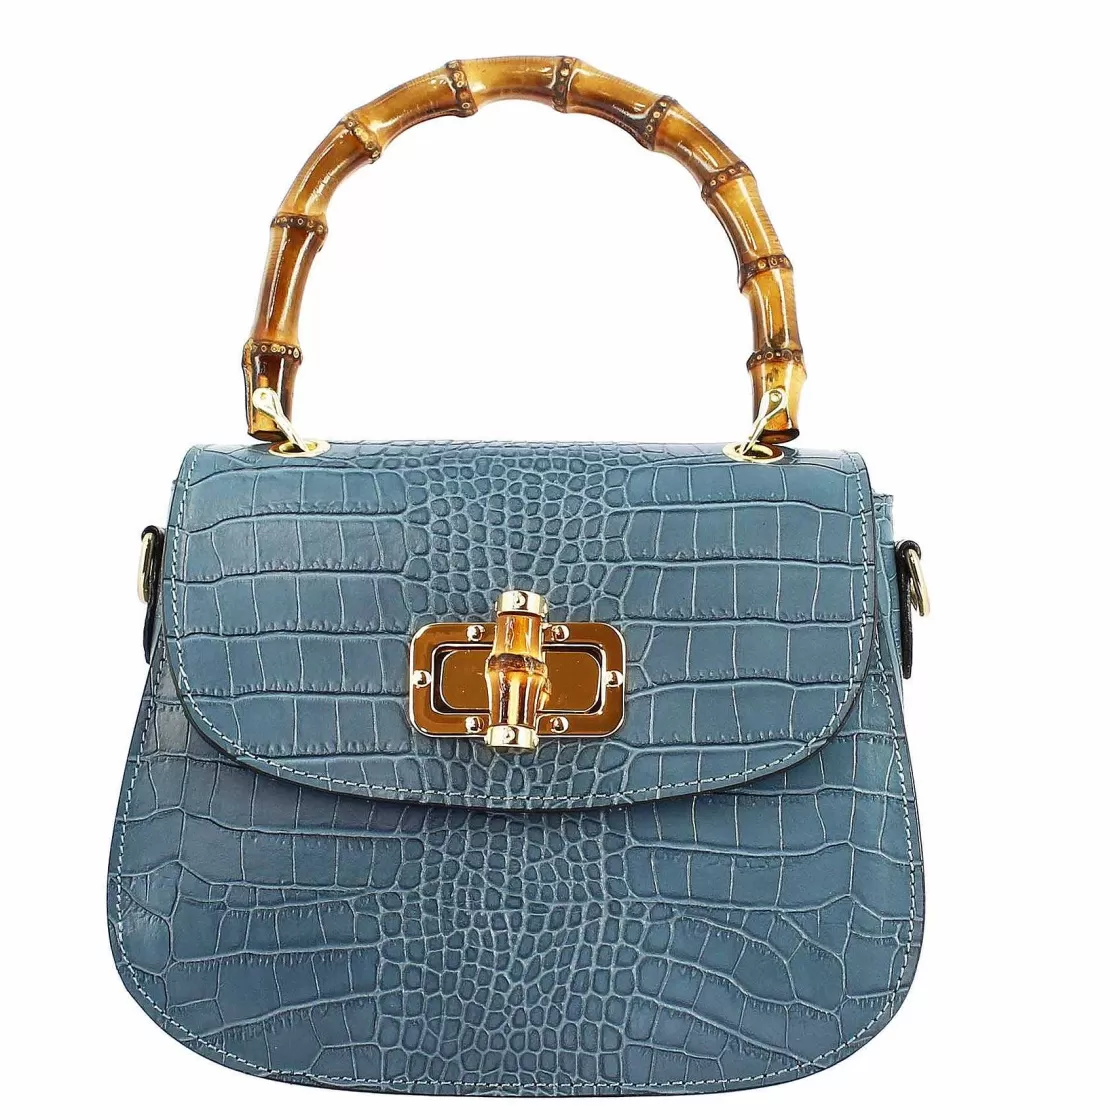 Leonardo Handmade Women'S Handbag In Light Blue Leather With Removable Shoulder Strap Discount